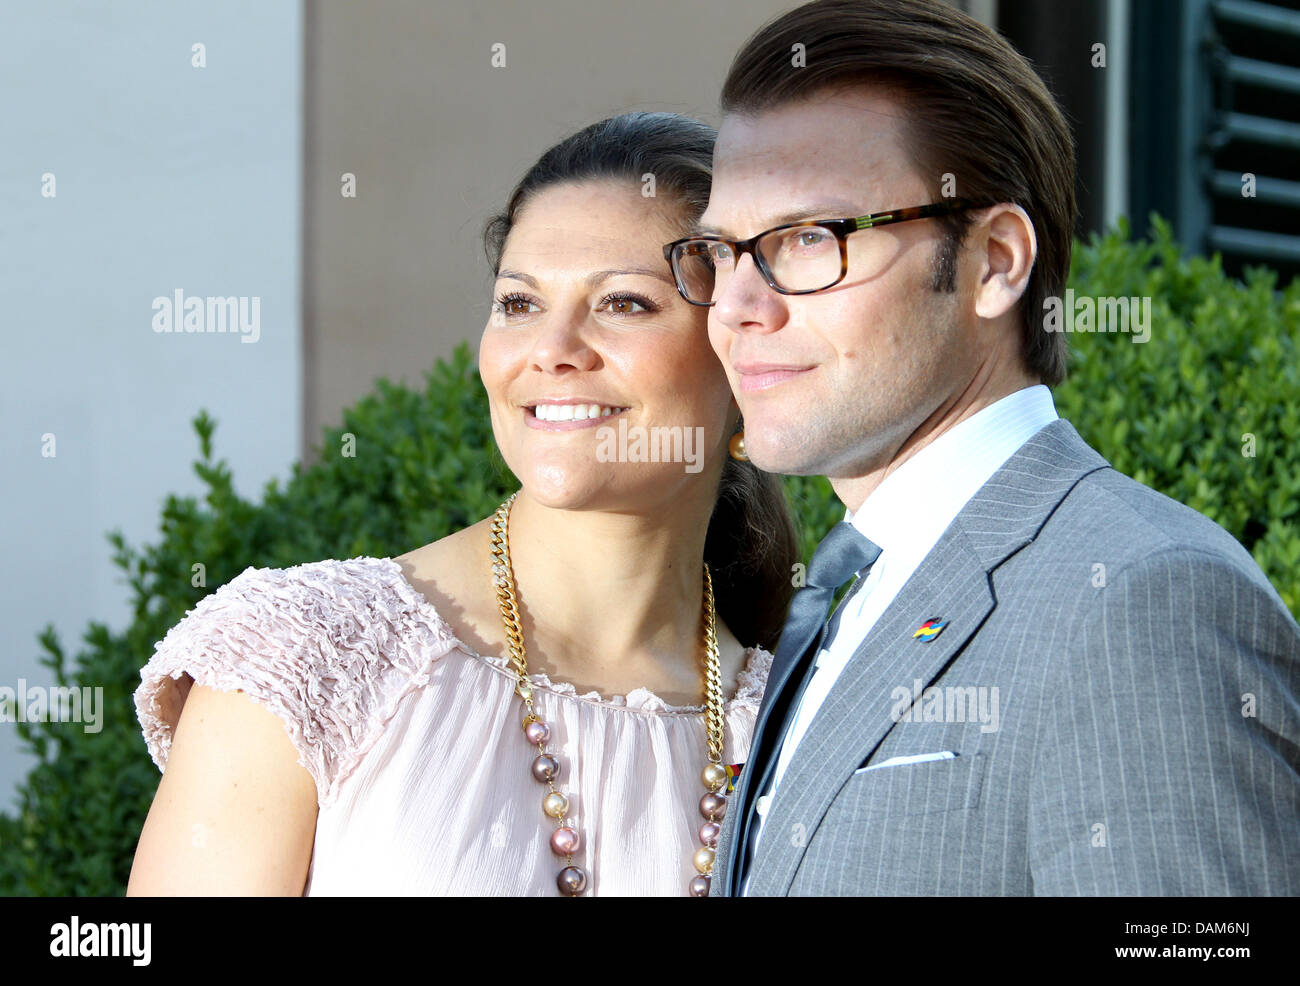 swedish-crown-princess-victoria-and-her-husband-prince-daniel-westling-DAM6NJ.jpg